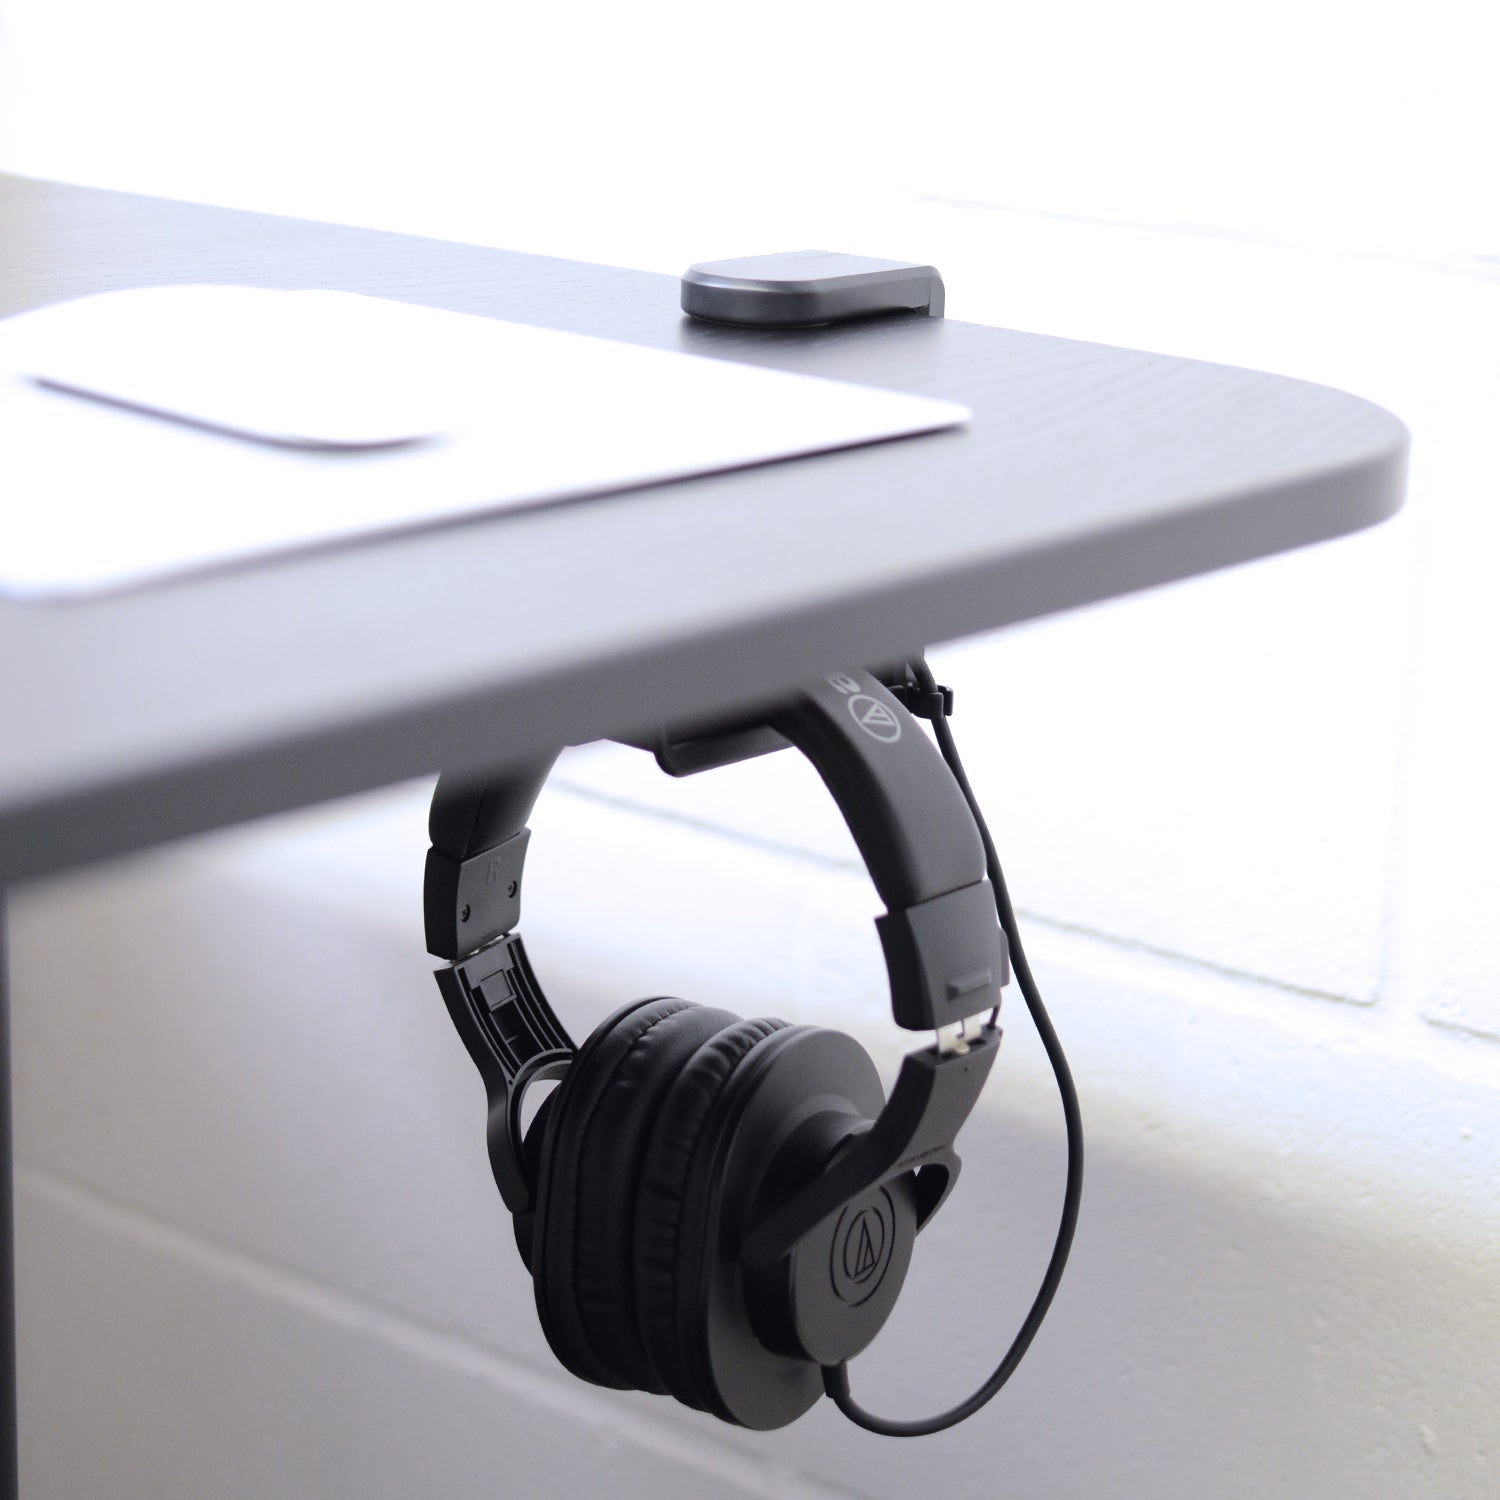 Black headphones on under desk headphone hanger attached to a white desk